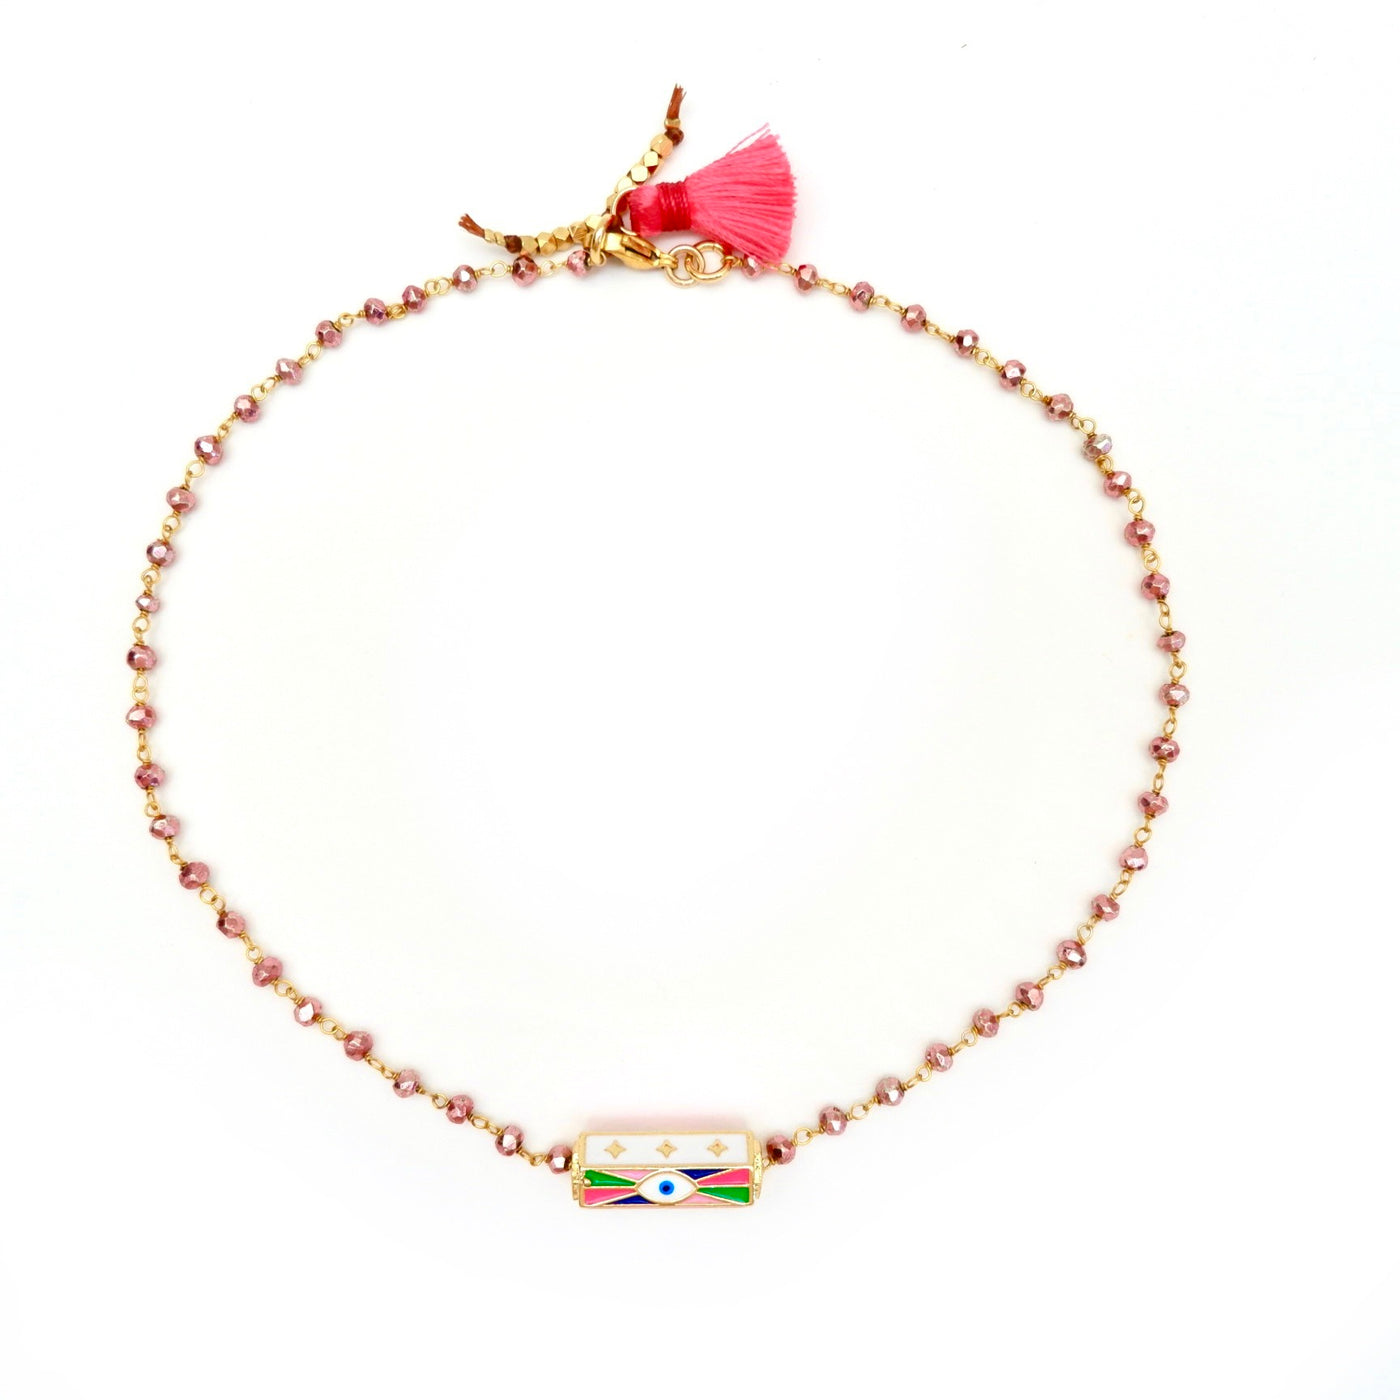 my pink agapi choker necklace